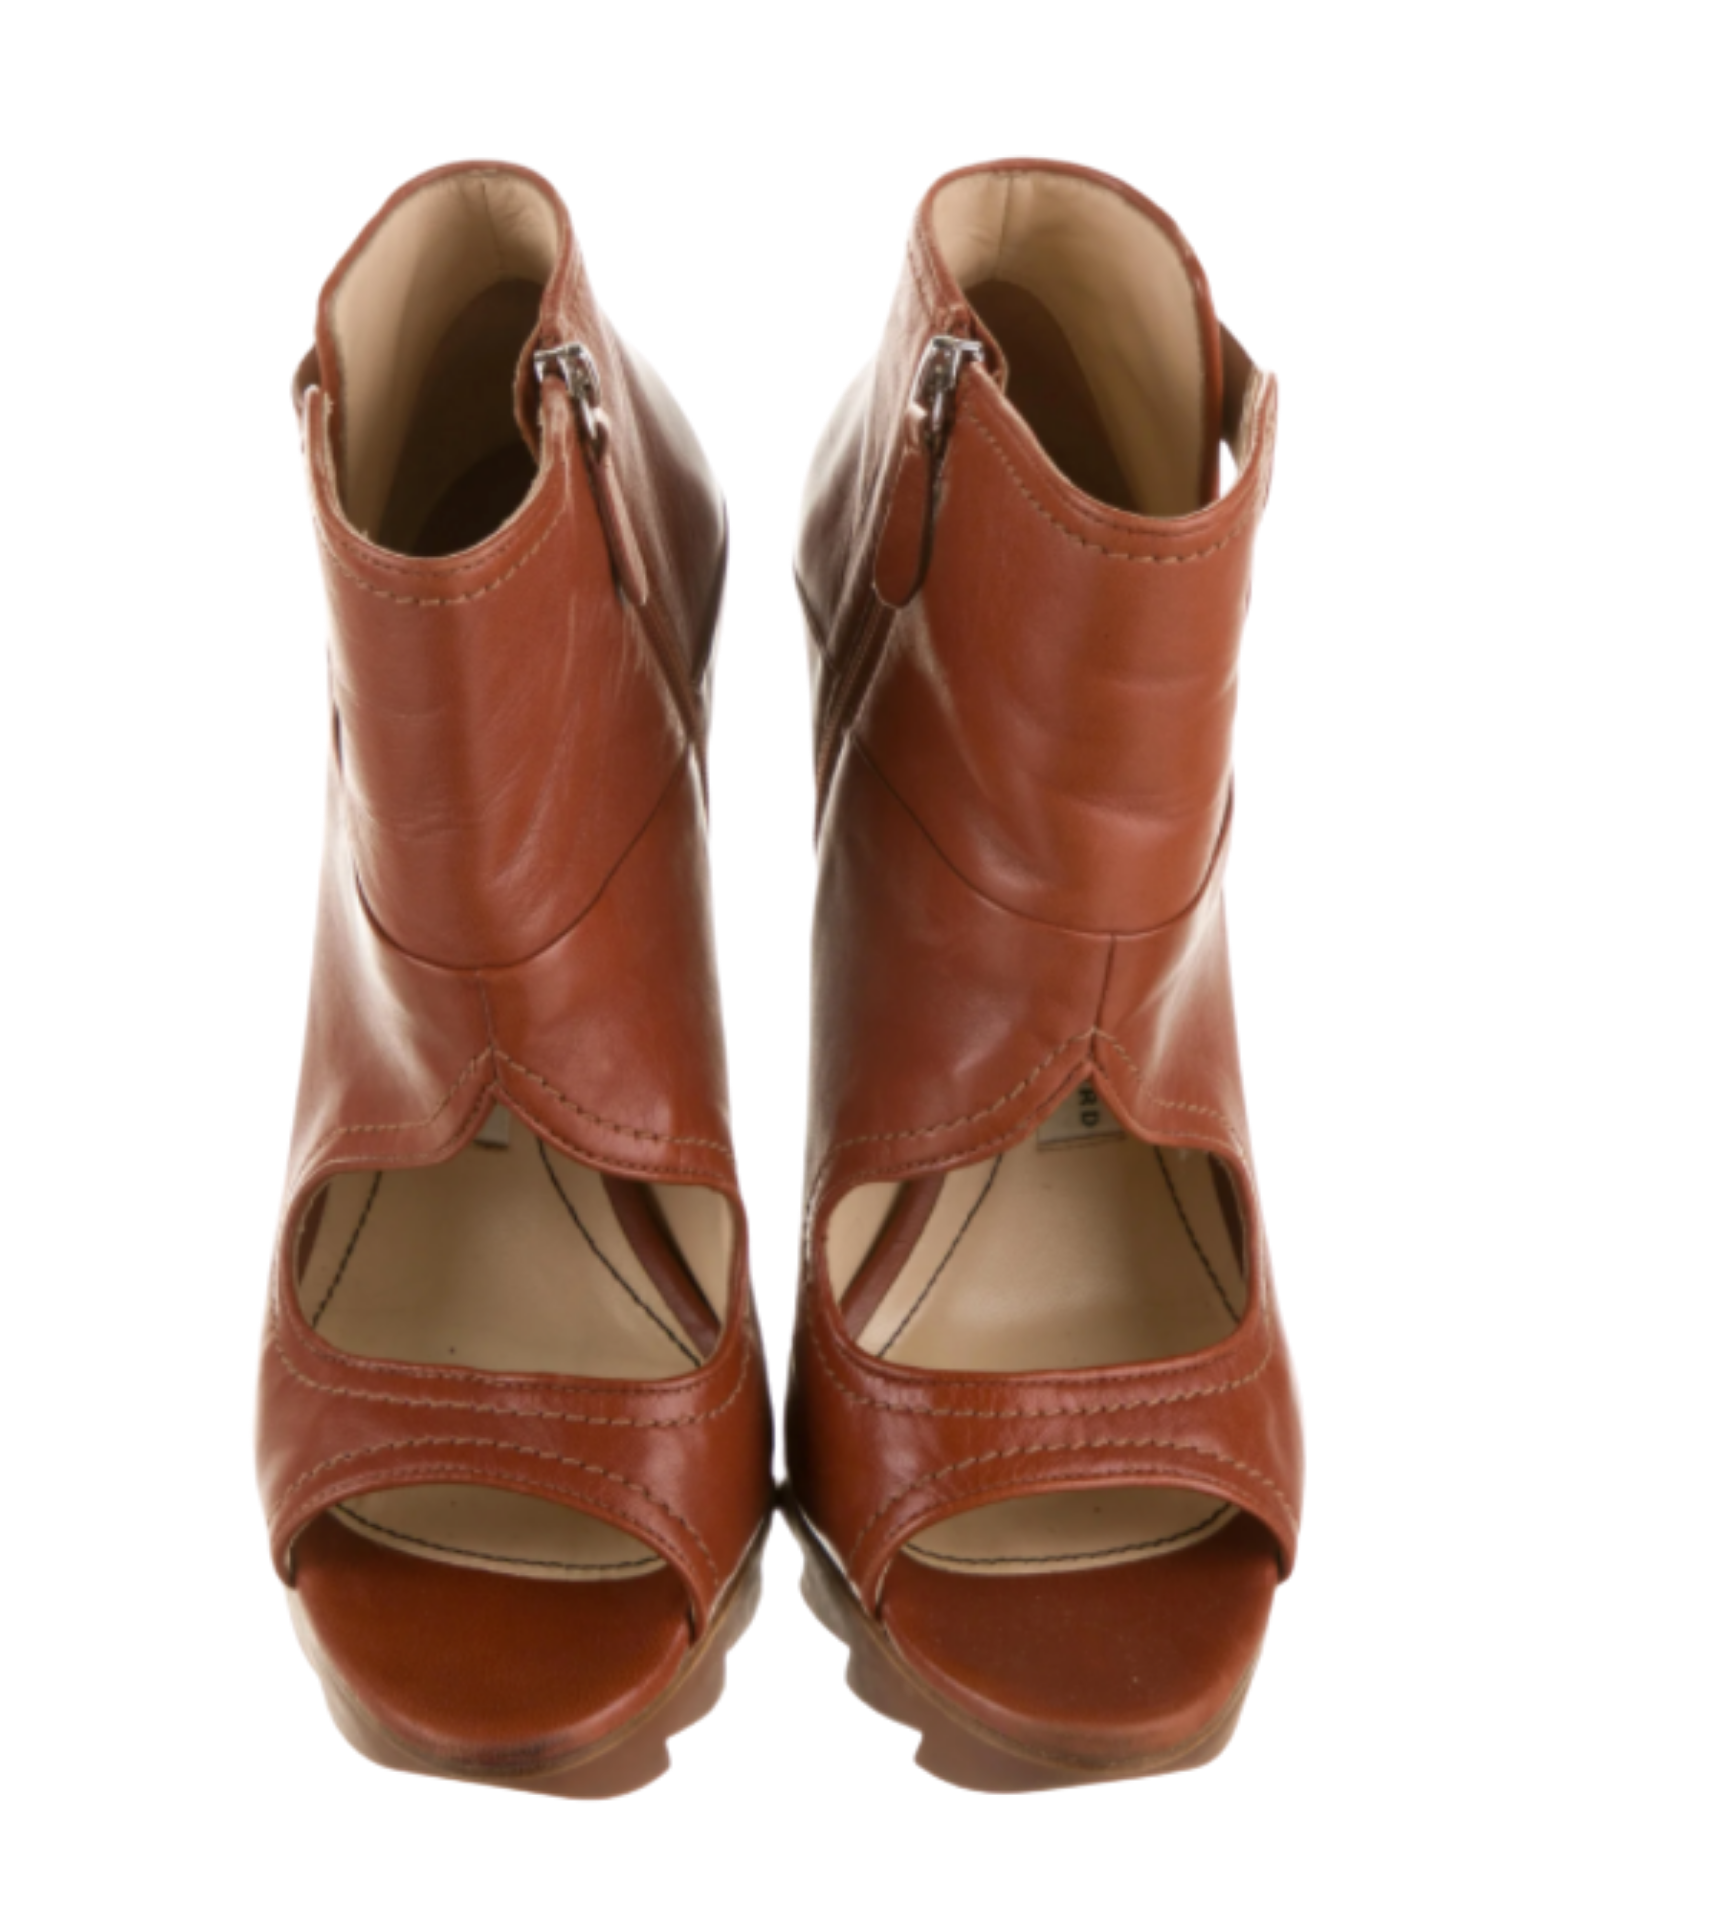 Camilla Skovgaard Leather Cutout Boots